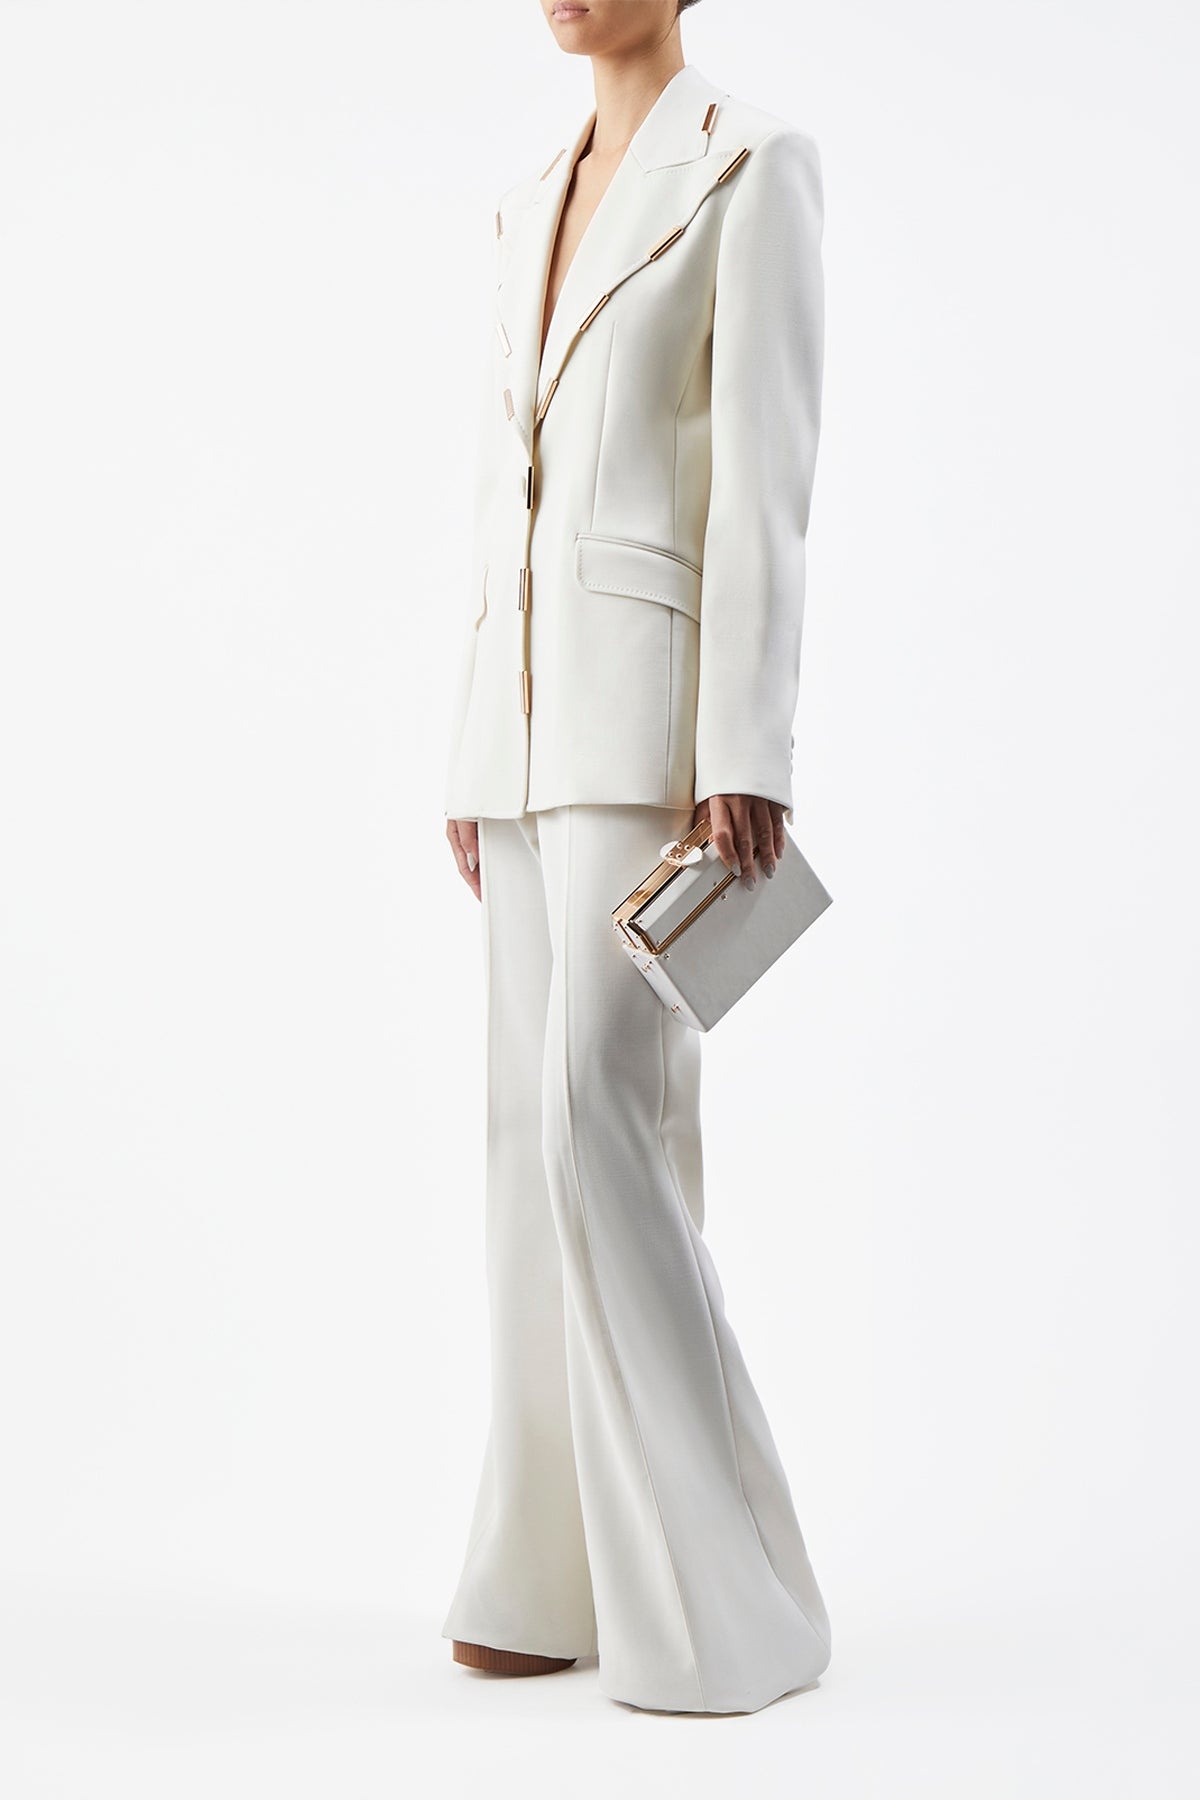 Leiva Blazer in Ivory Sportswear Wool with Gold Bars - 4